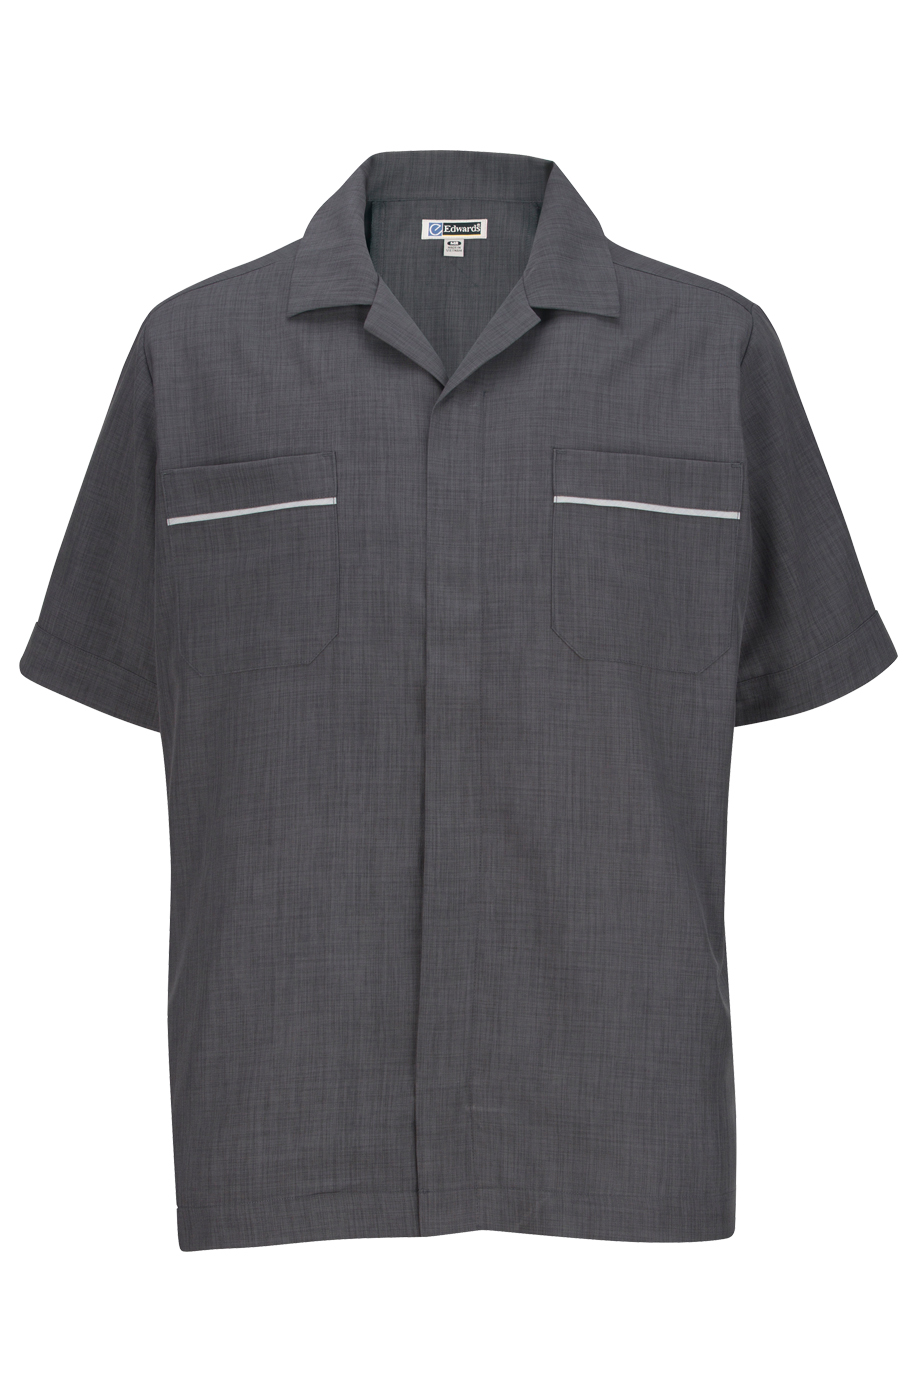 Men's Pinnacle Service Shirt 4280